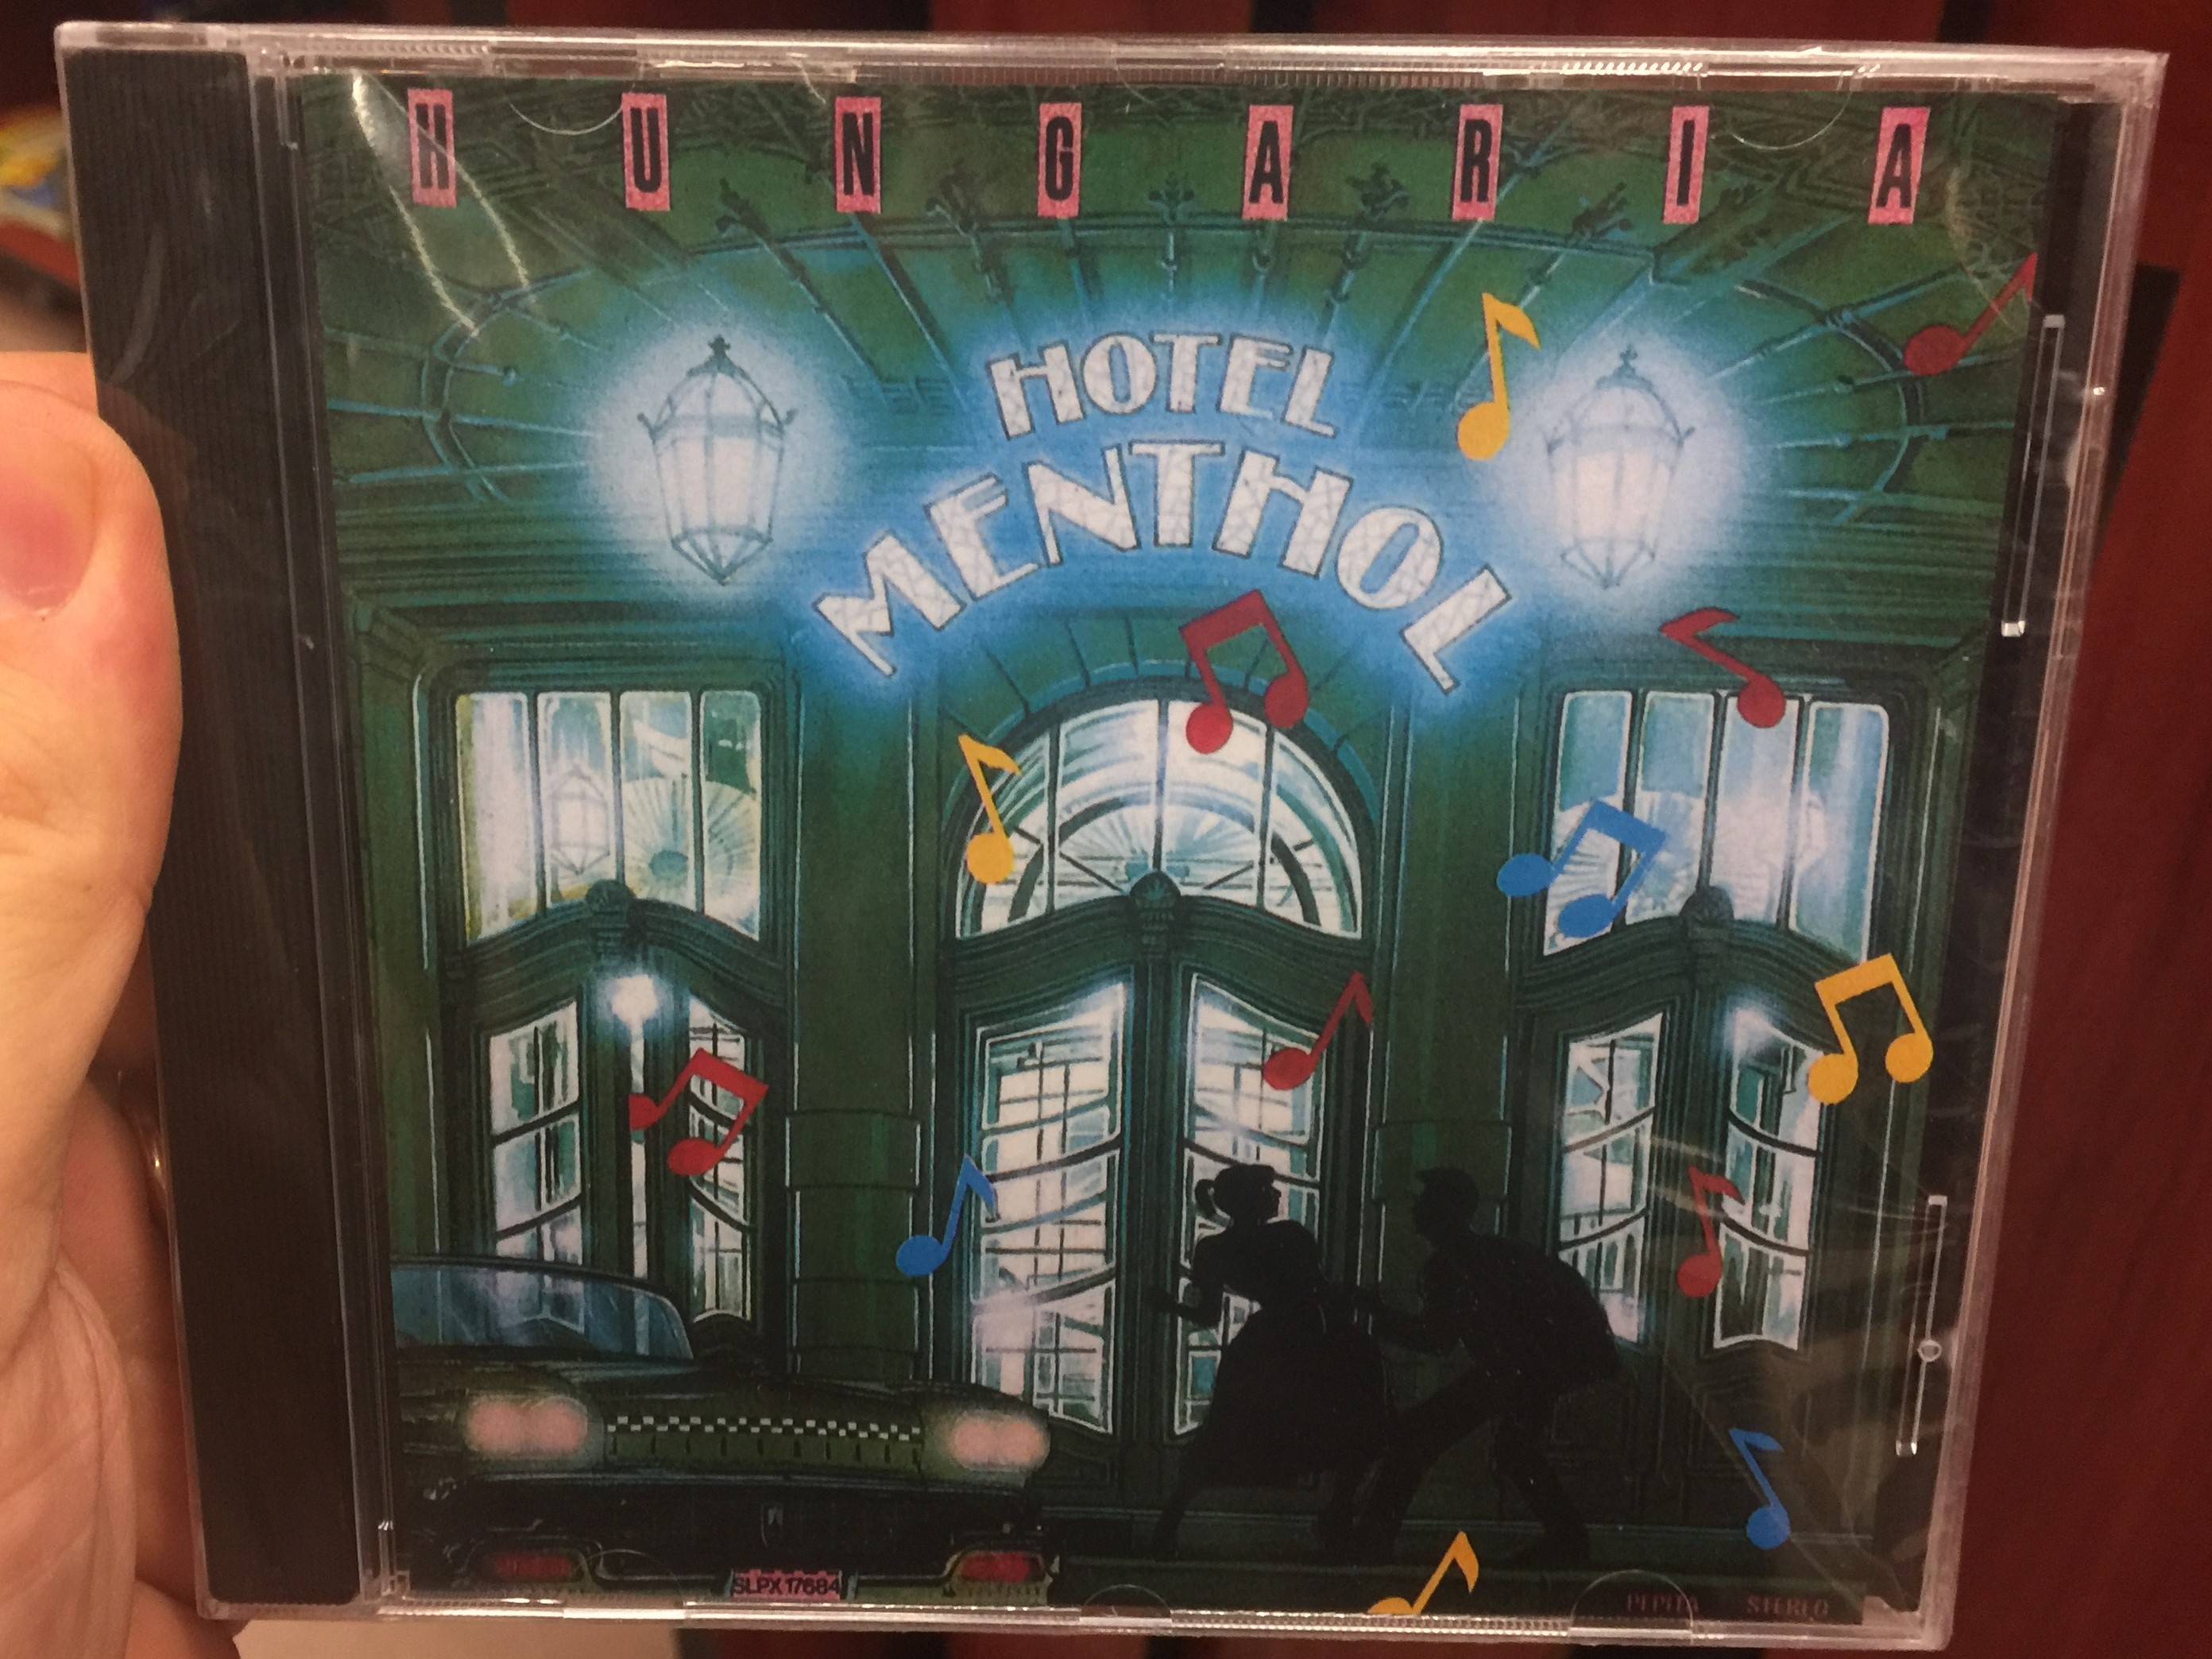 hungaria-hotel-menthol-hungaroton-gong-audio-cd-hcd-17684-1-.jpg